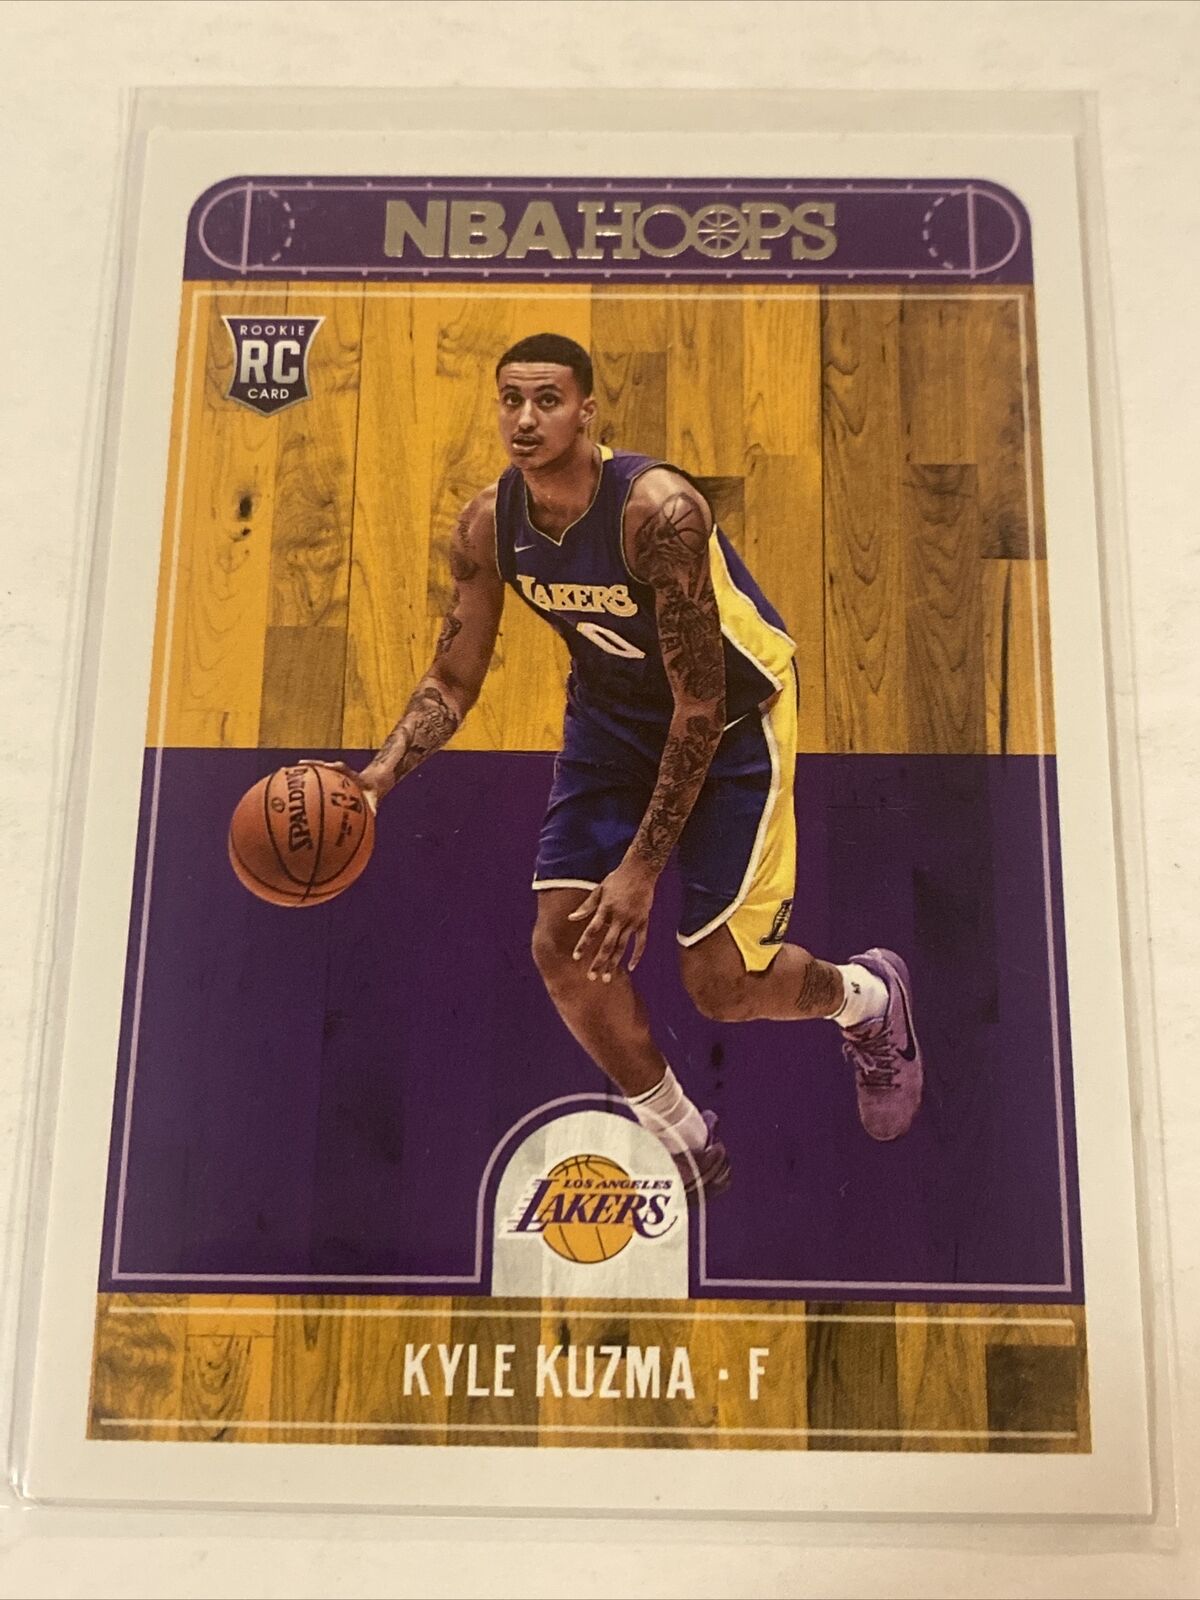 KYLE KUZMA ROOKIE CARD RC LOS ANGELES LAKERS NBA HOOPS